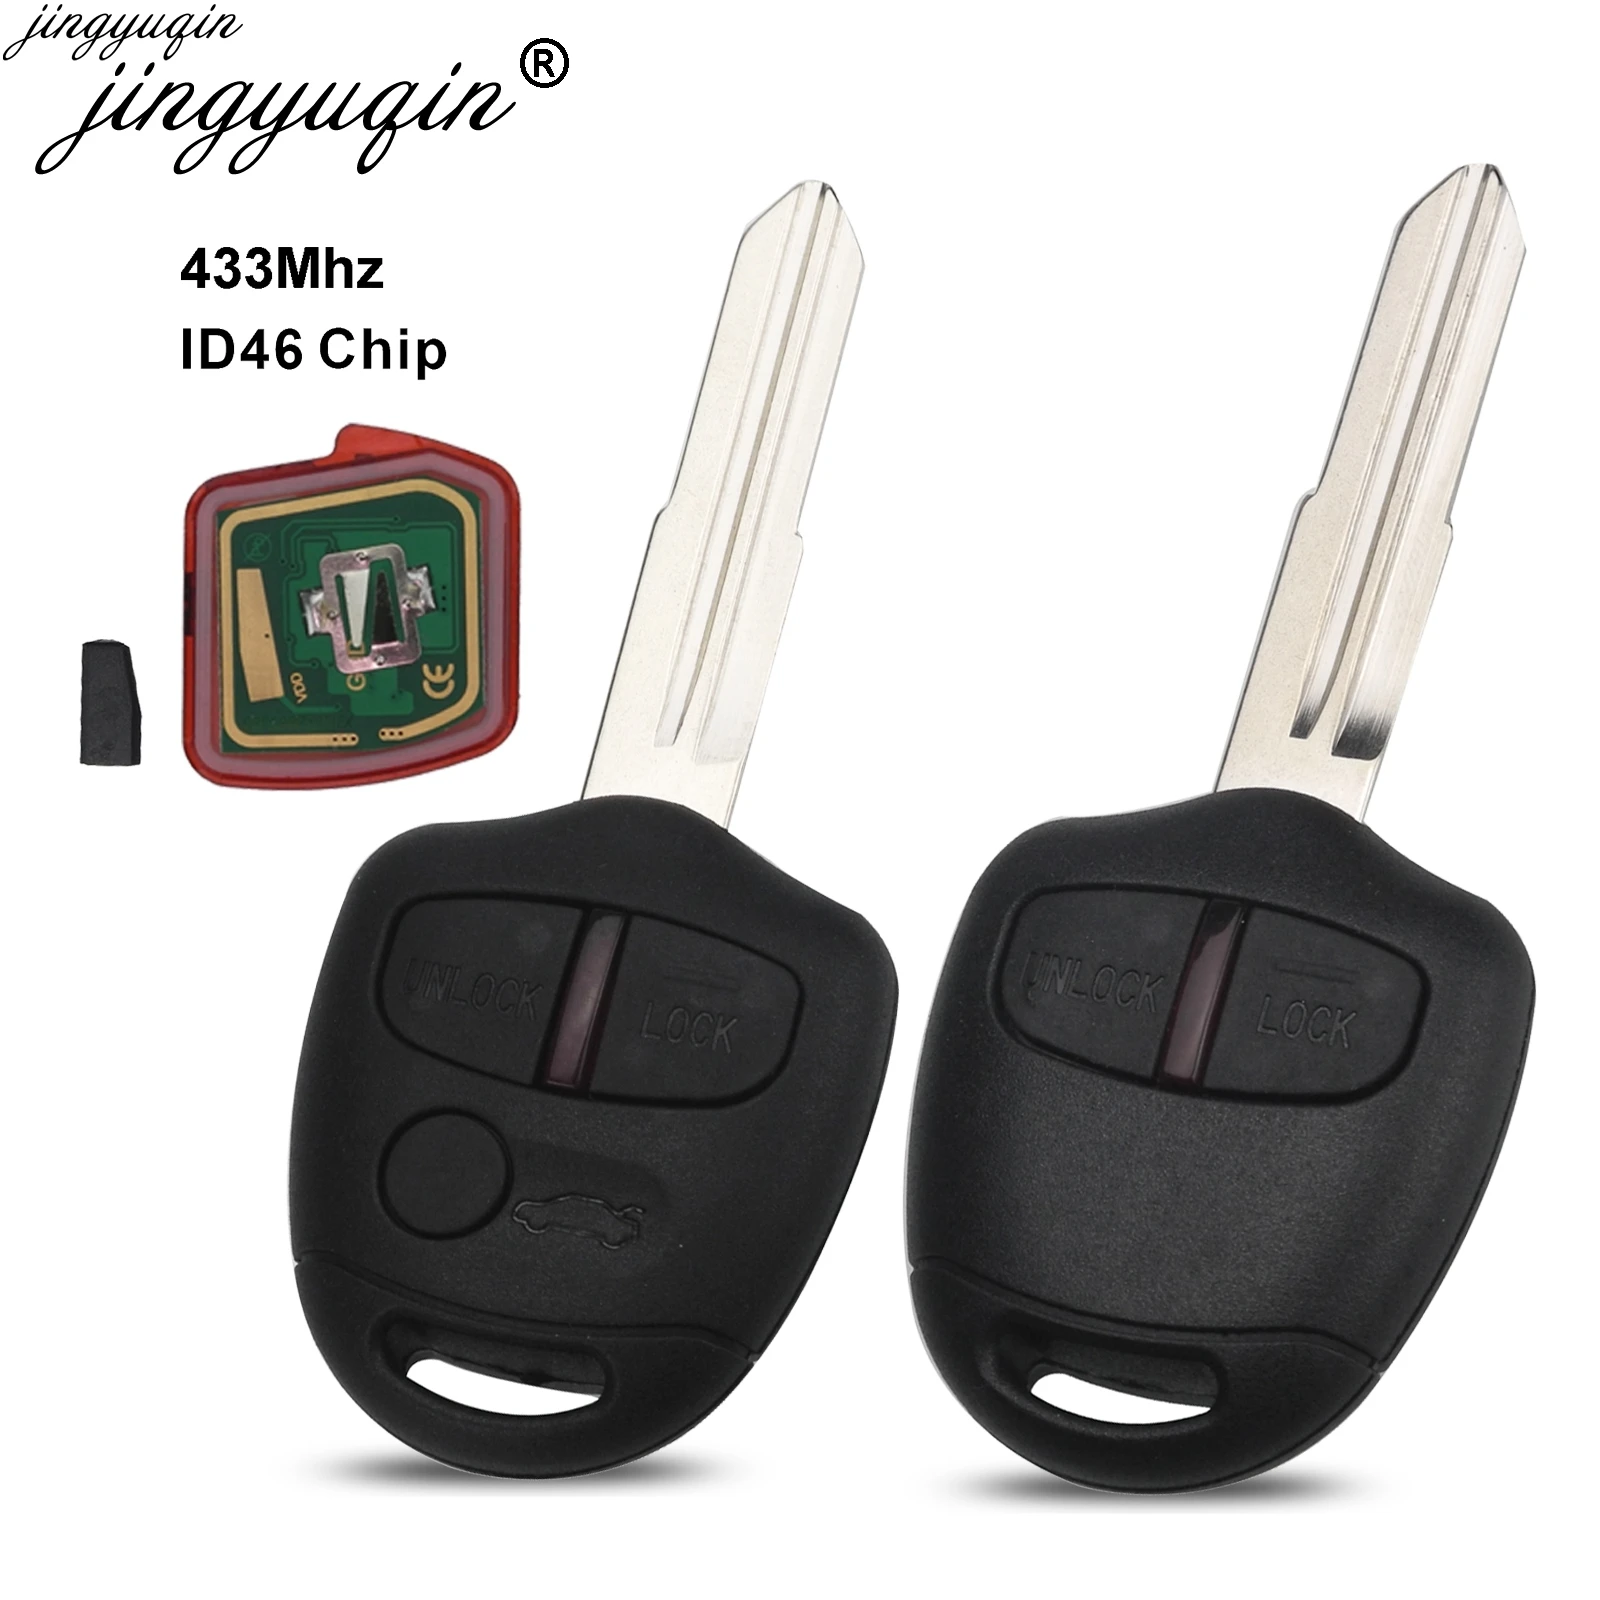 

Jingyuqin 5pcs 2/3Buttons Remote Key Suit for Mitsubishi 433Mhz Chip ID46 For Montero Pajero L200 Shogun Triton Key Fob MIT11